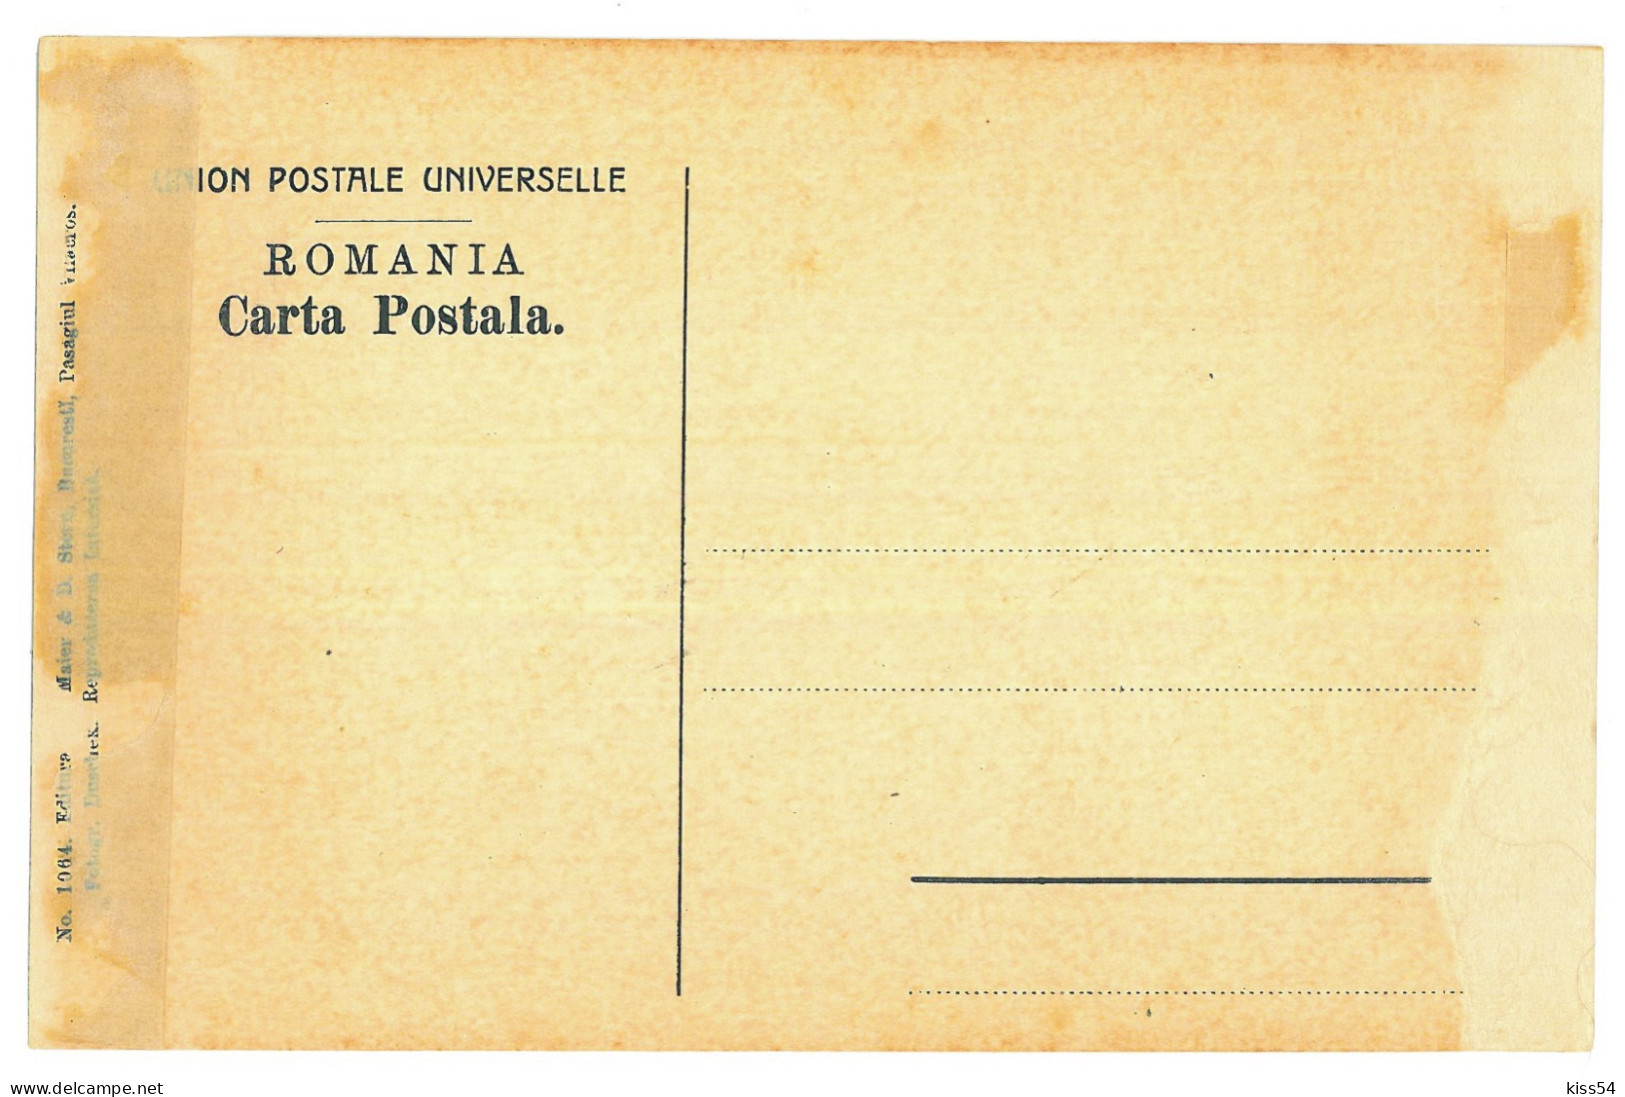 RO 77 - 22355 SINAIA, Prahova, Carriage, Romania - Old Postcard - Unused - Romania